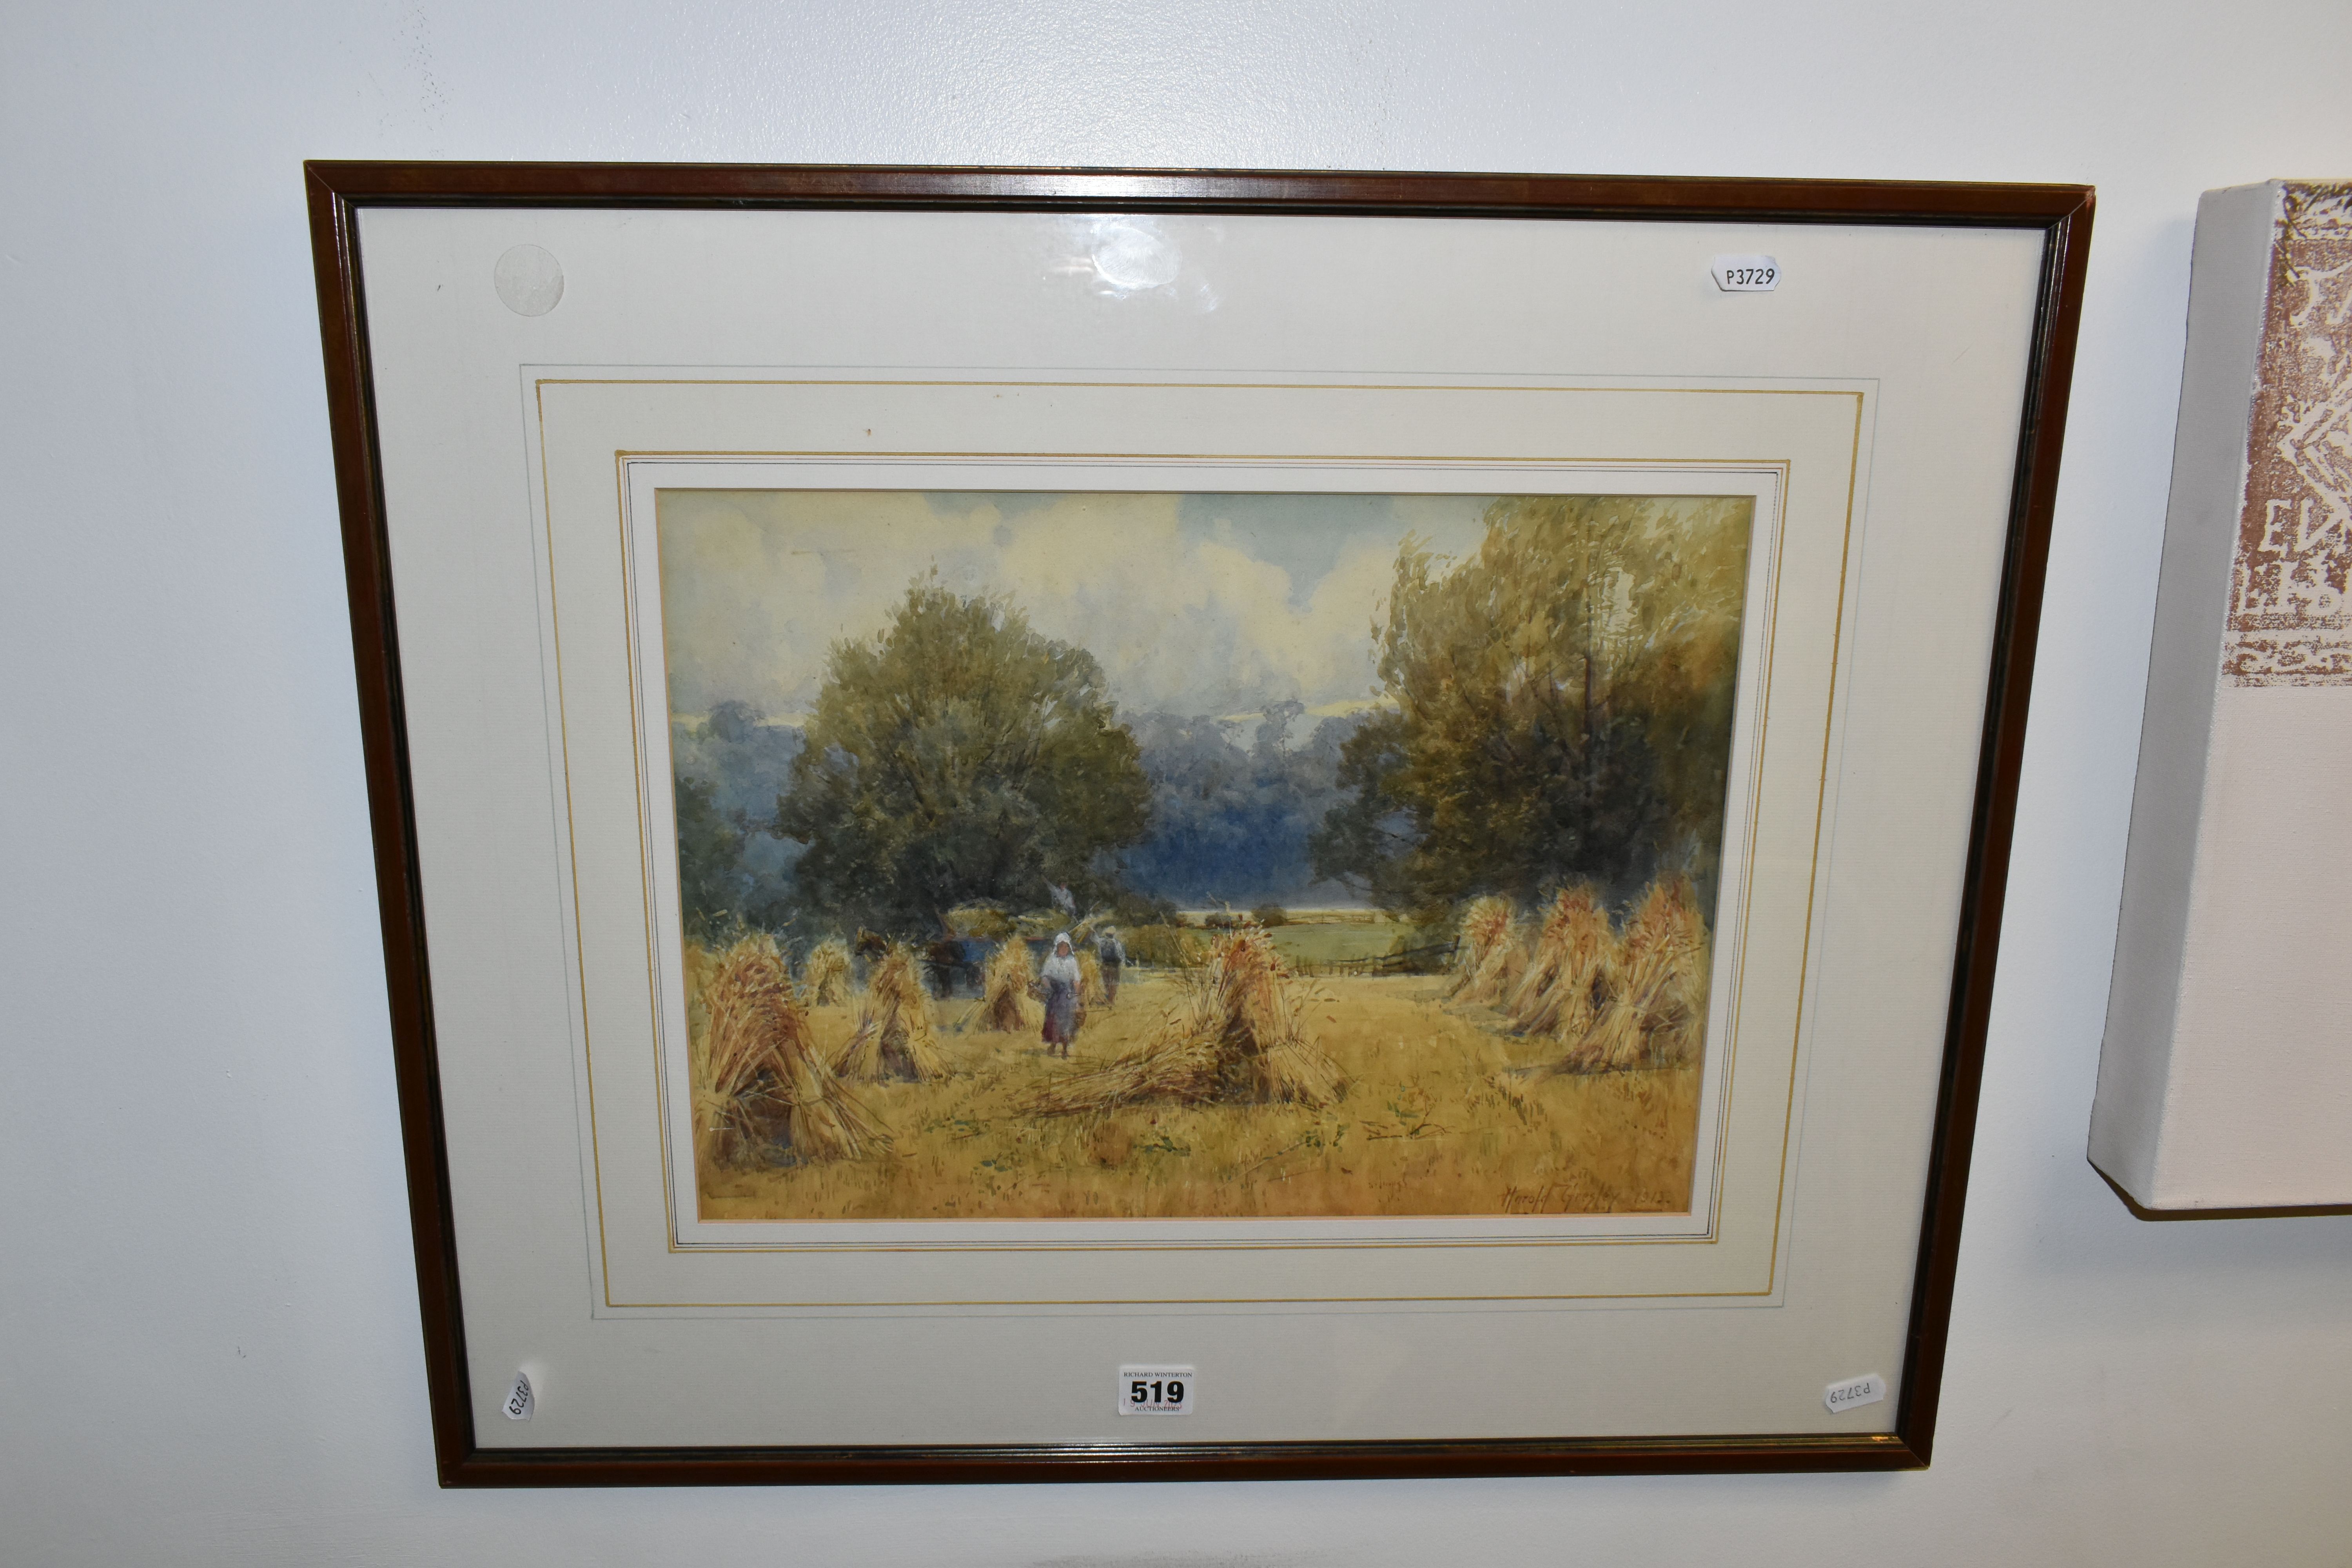 HAROLD GRESLEY (1892-1962) 'HARVESTING NEAR KINGS MILLS', a picturesque landscape depicting